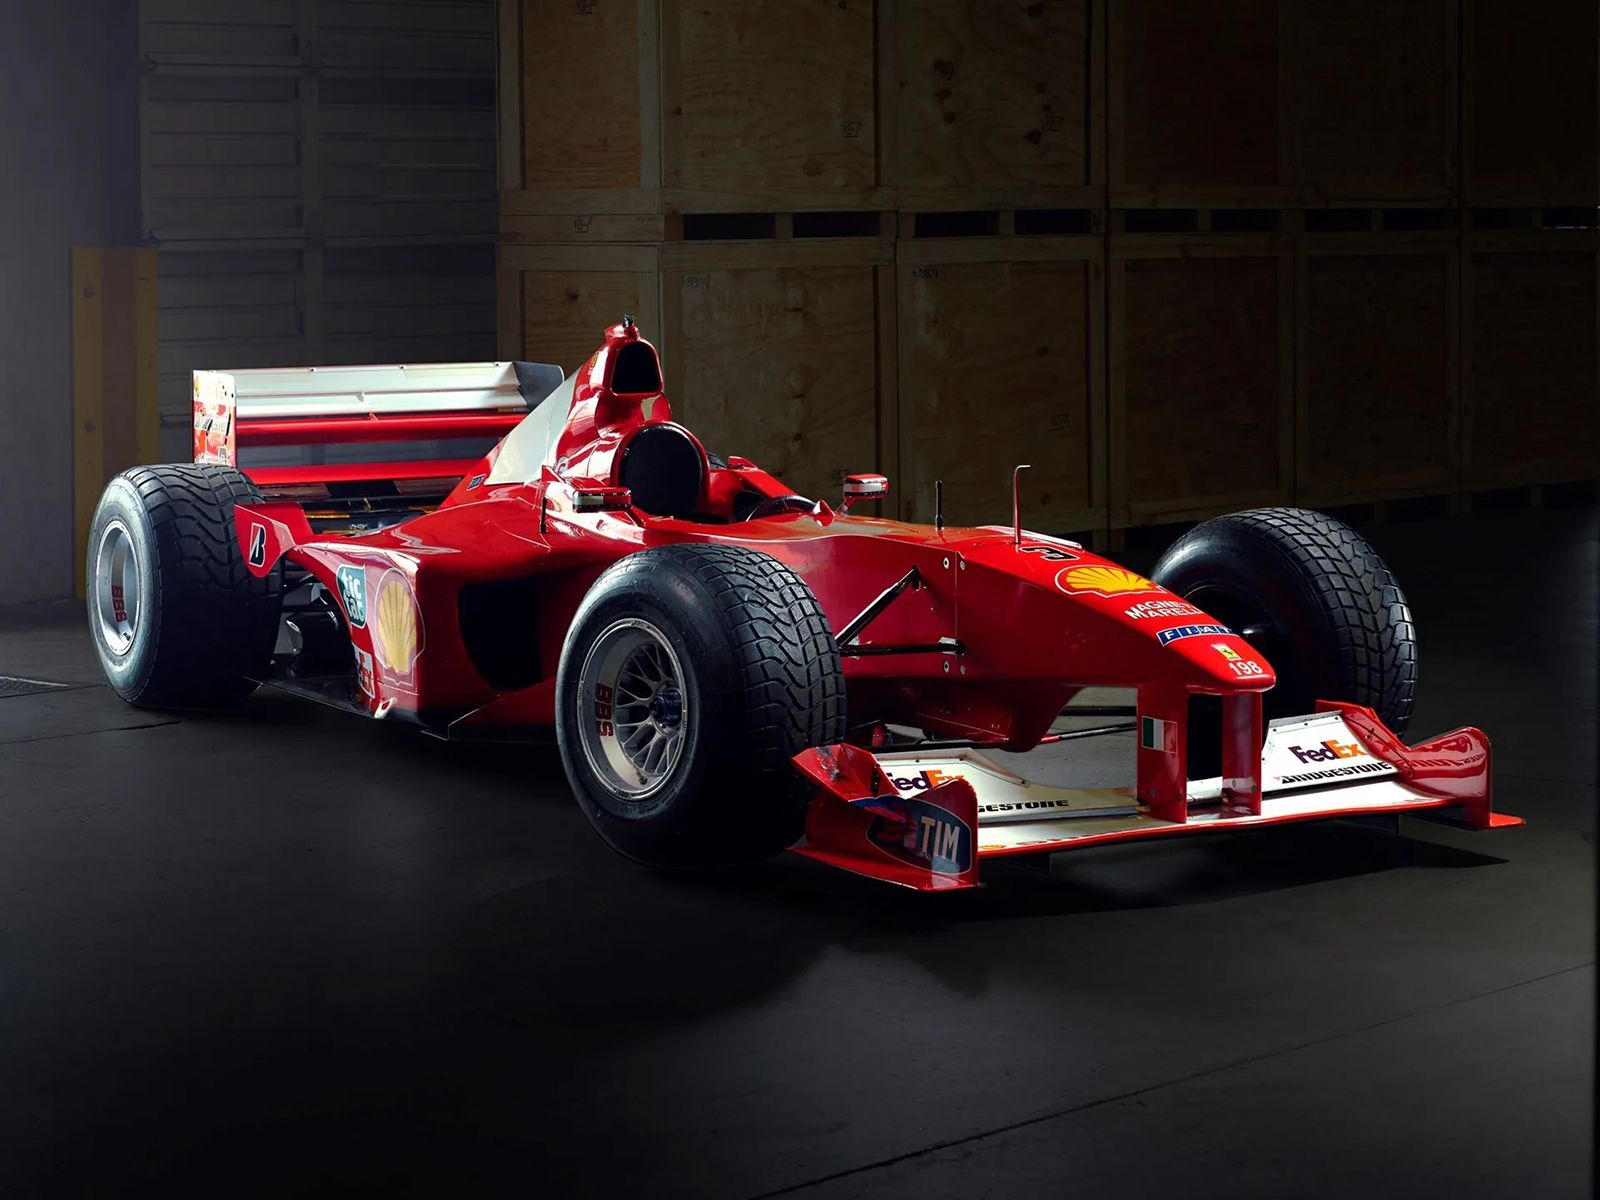 Michael Schumacher: Rare Ferrari racing car from 2000 season